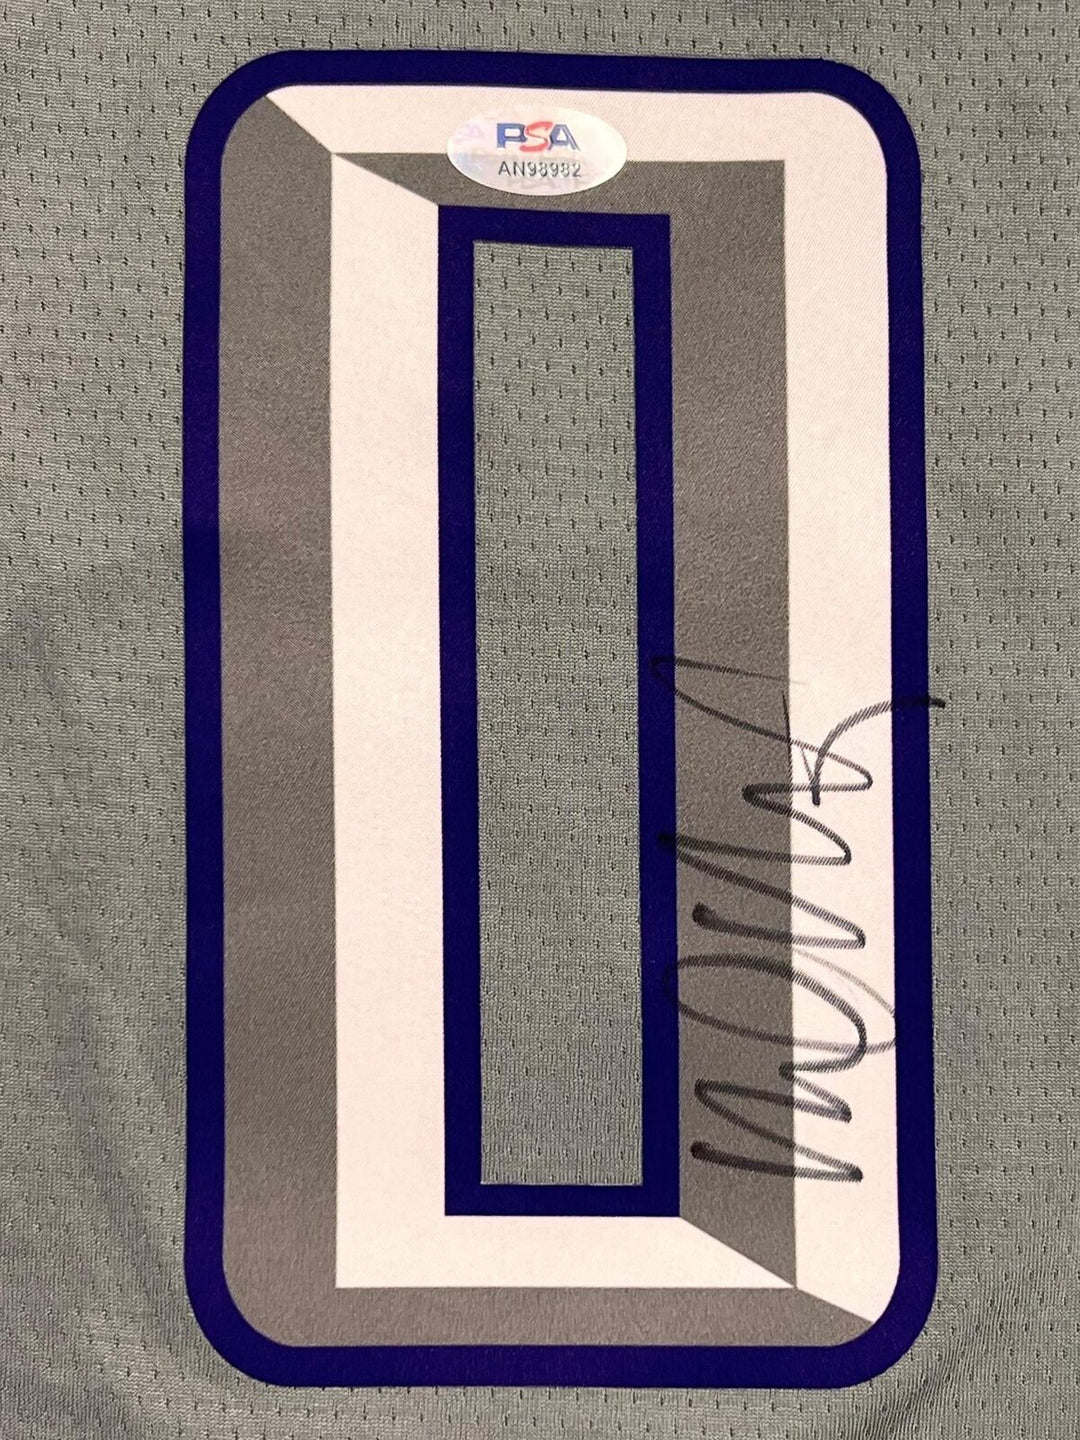 MALIK MONK signed jersey PSA/DNA Sacramento Kings Autographed Image 2